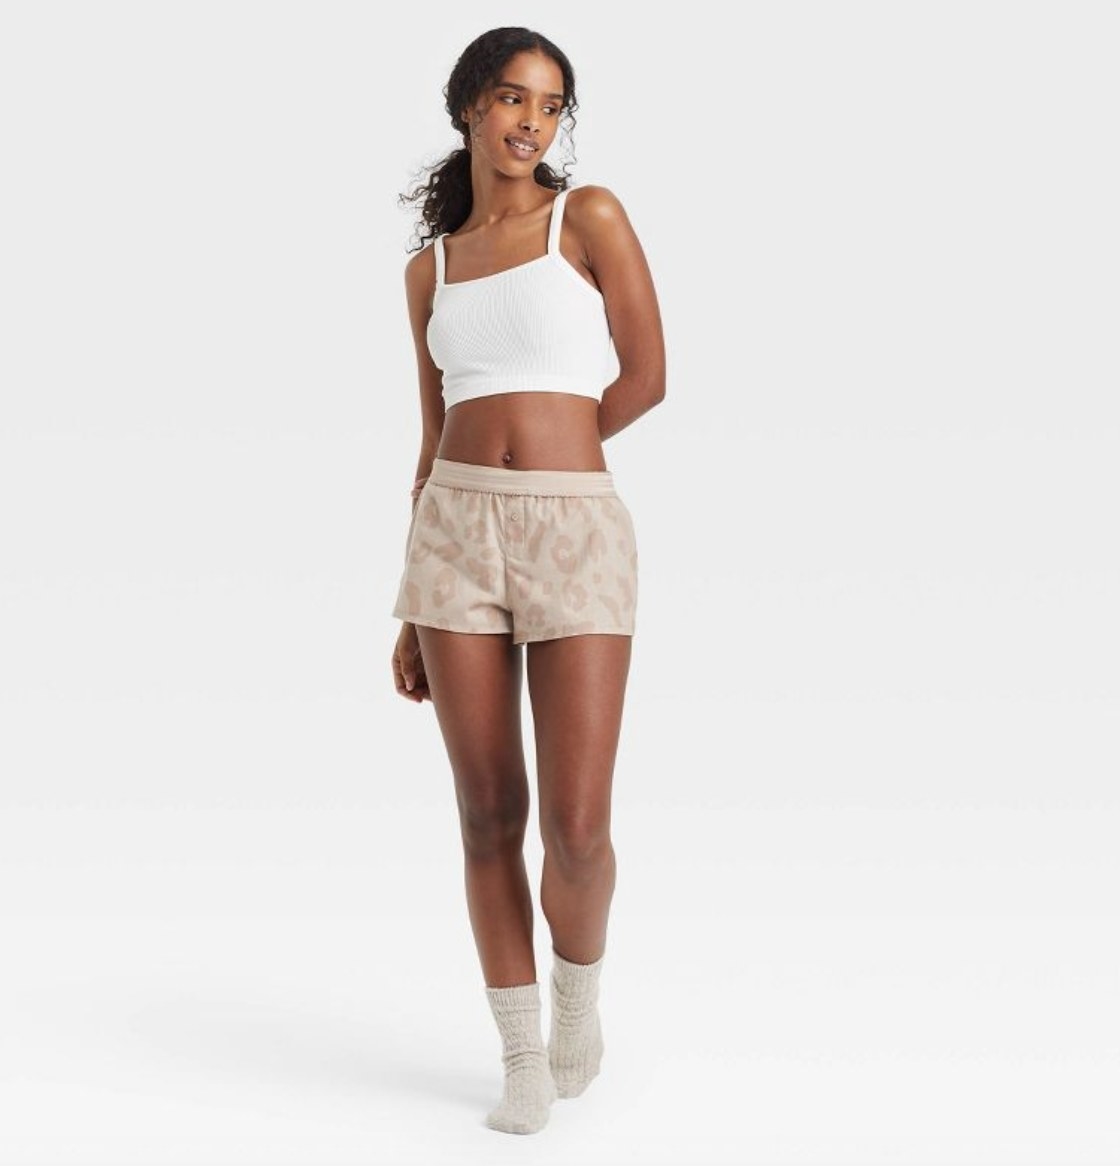 a model wearing the sleep shorts in cheetah print